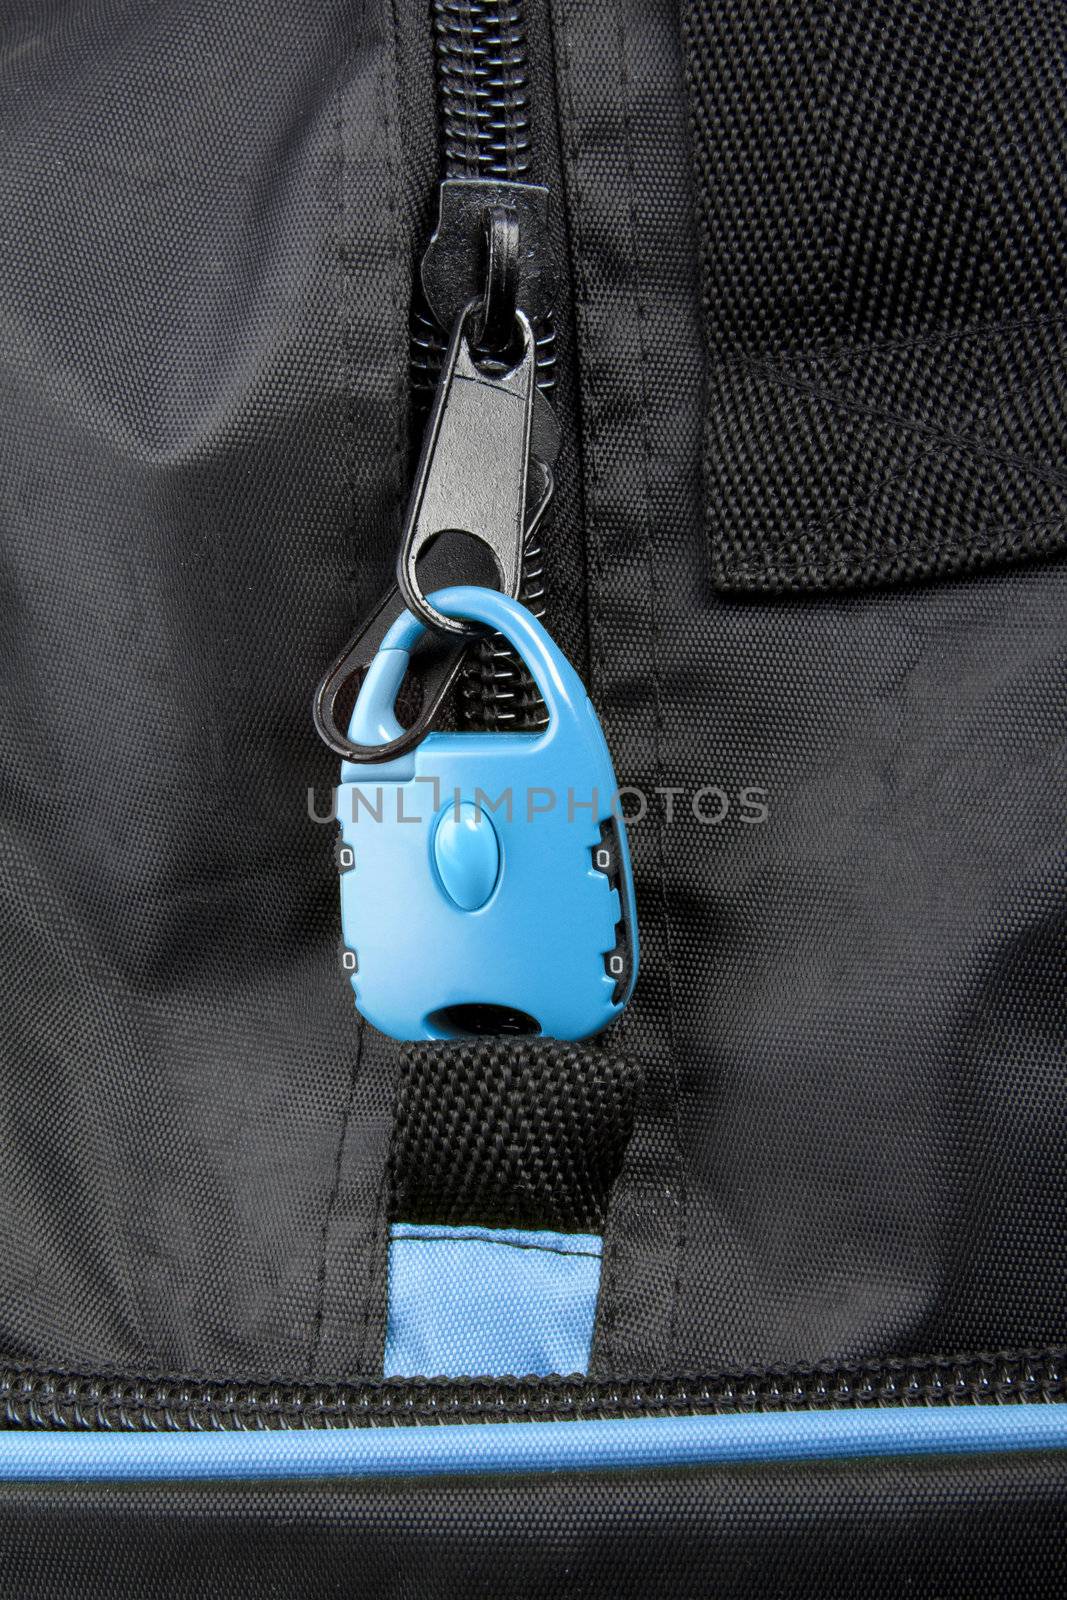 Blue lock on bag close up or background